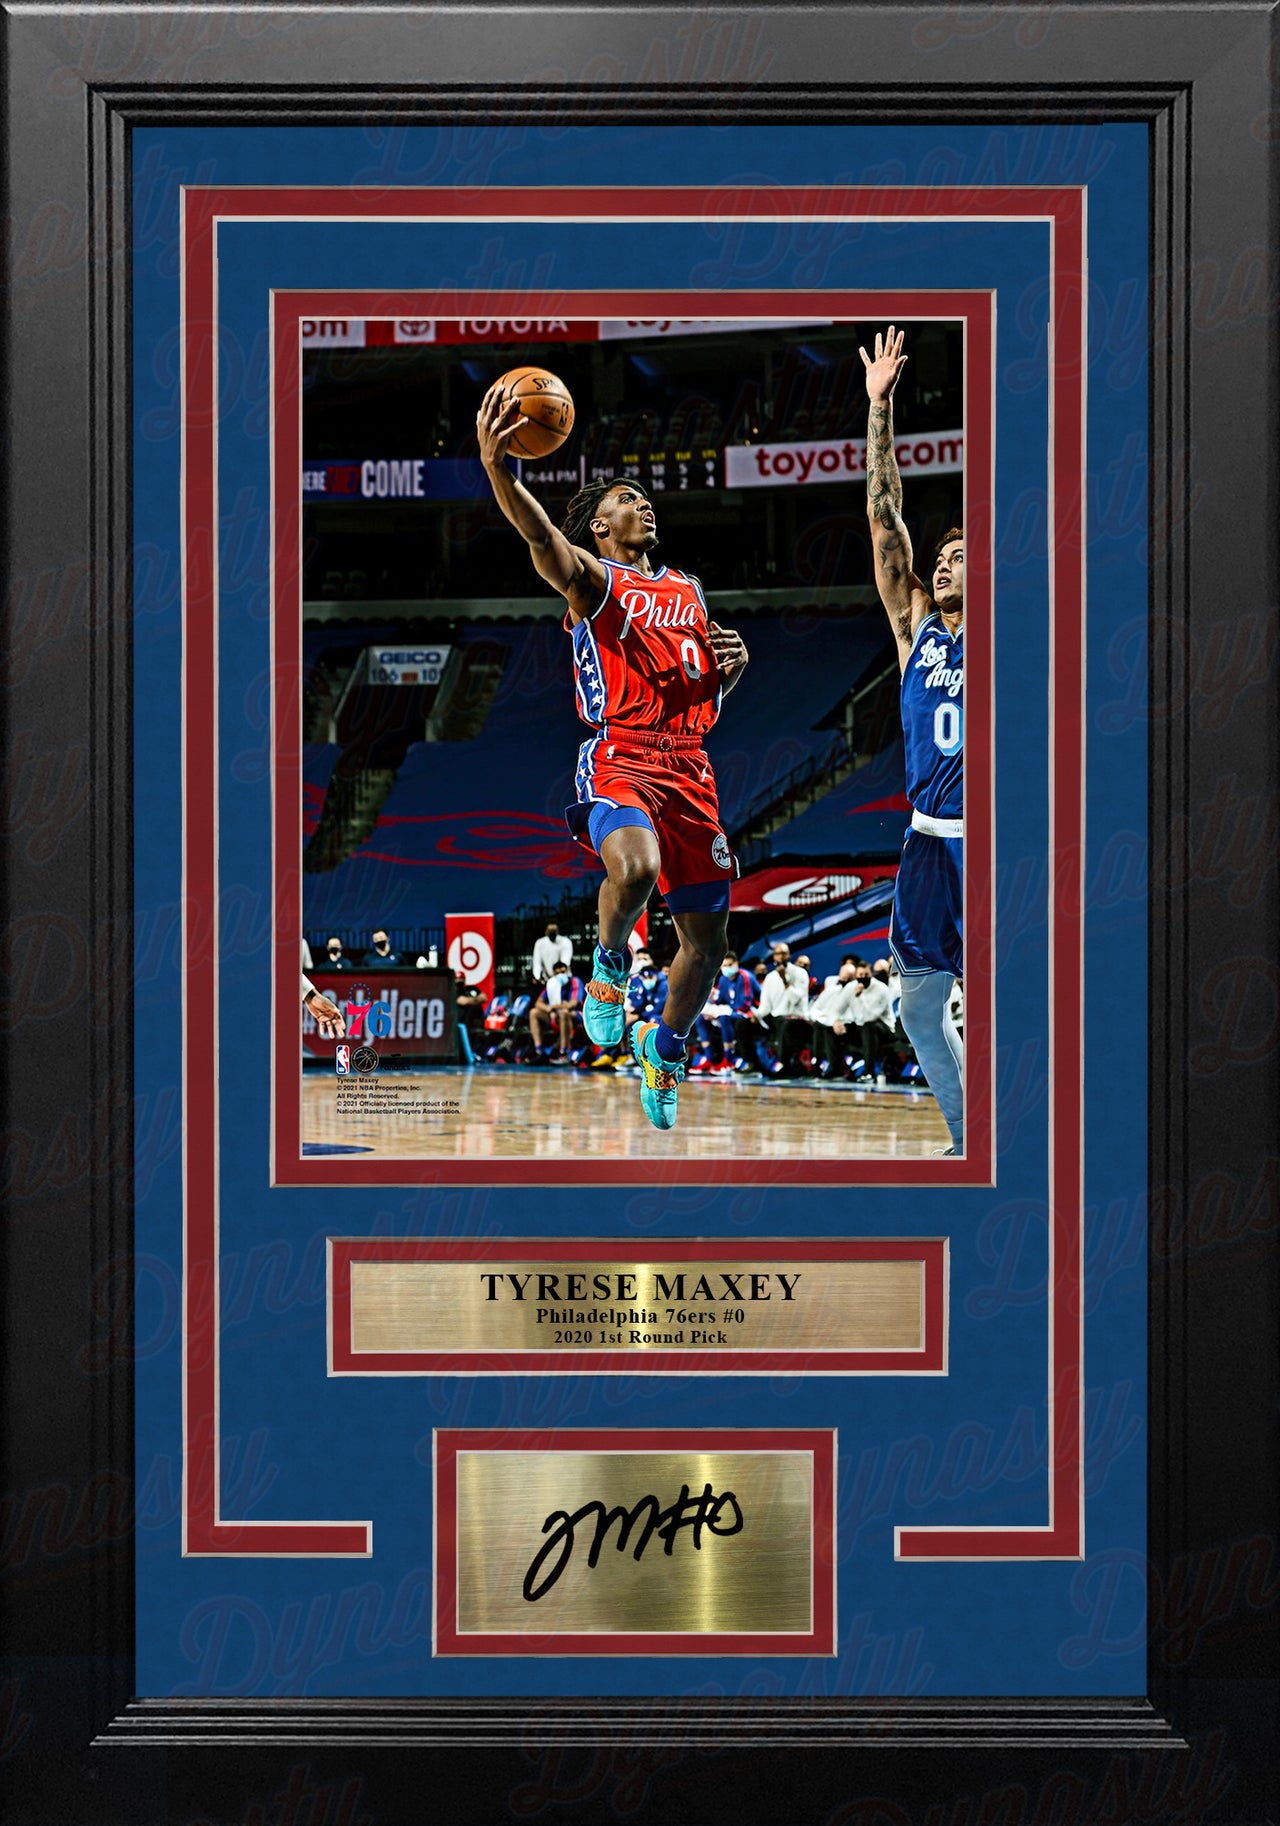 Allen Iverson Standing Over Tyronn Lue Philadelphia 76ers Autographed  Framed Basketball Photo